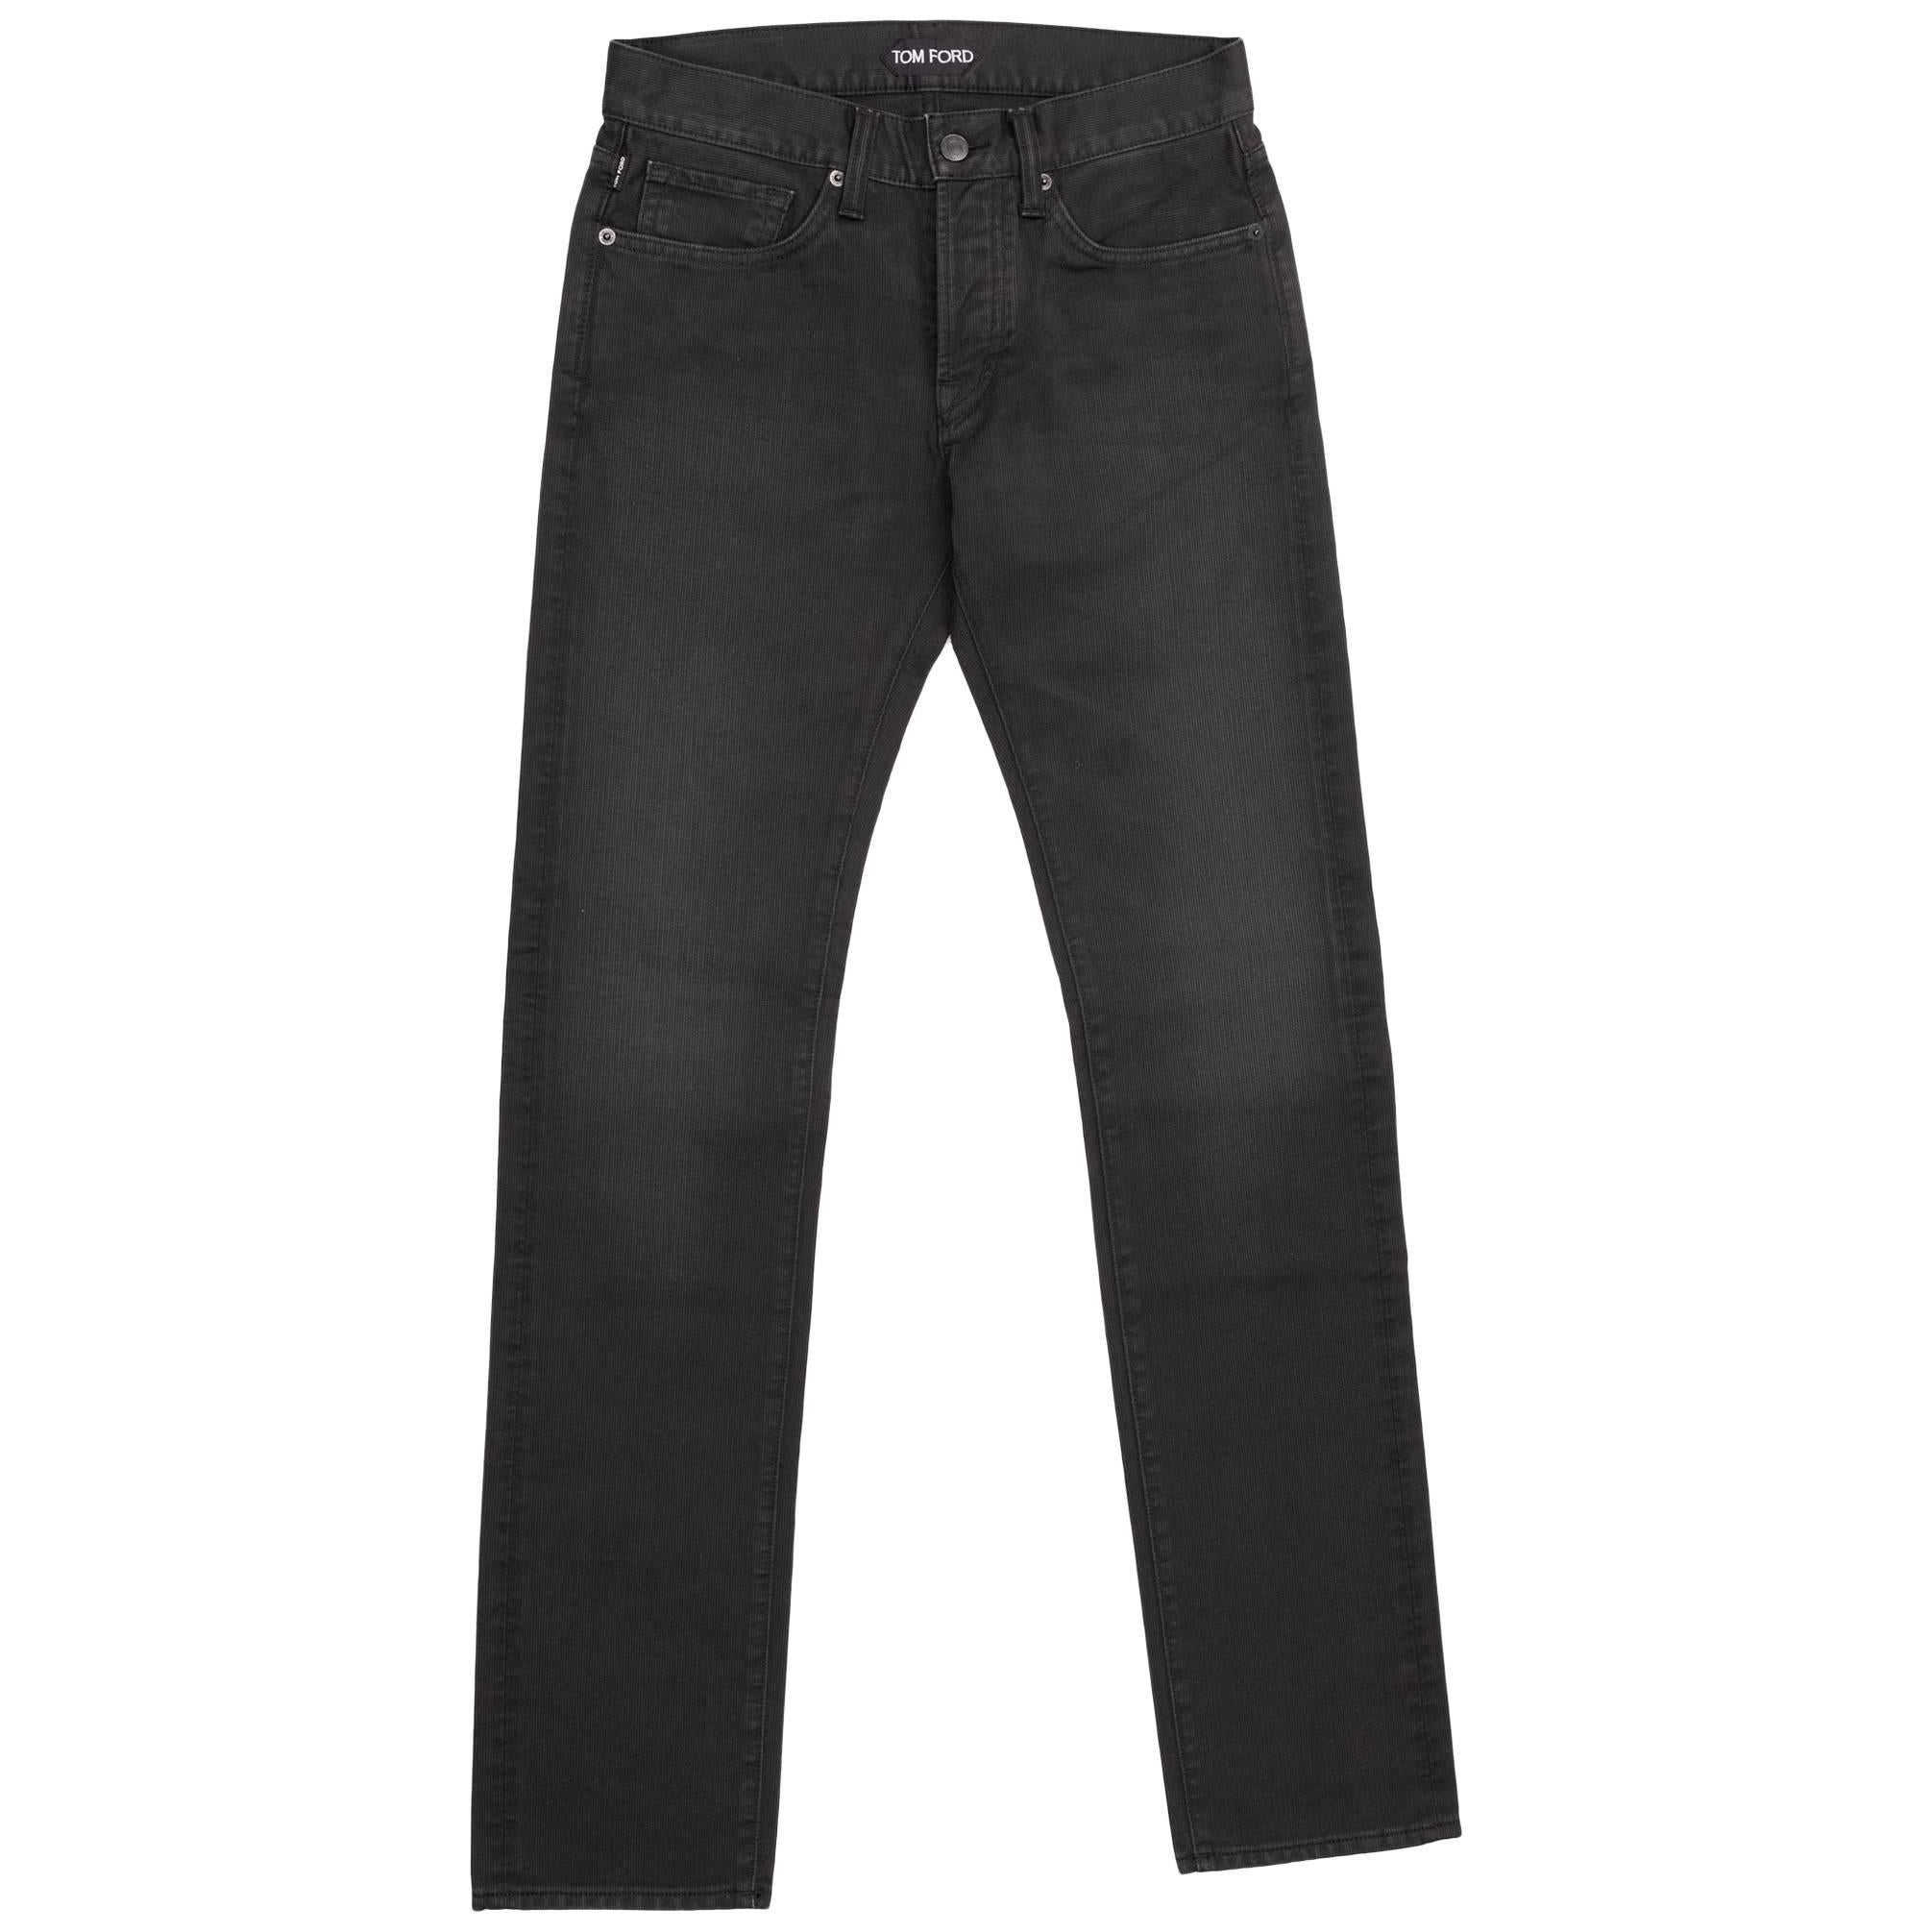 om Ford Denim Jeans Dark Grey Wash Size 28 Straight Fit Model For Sale